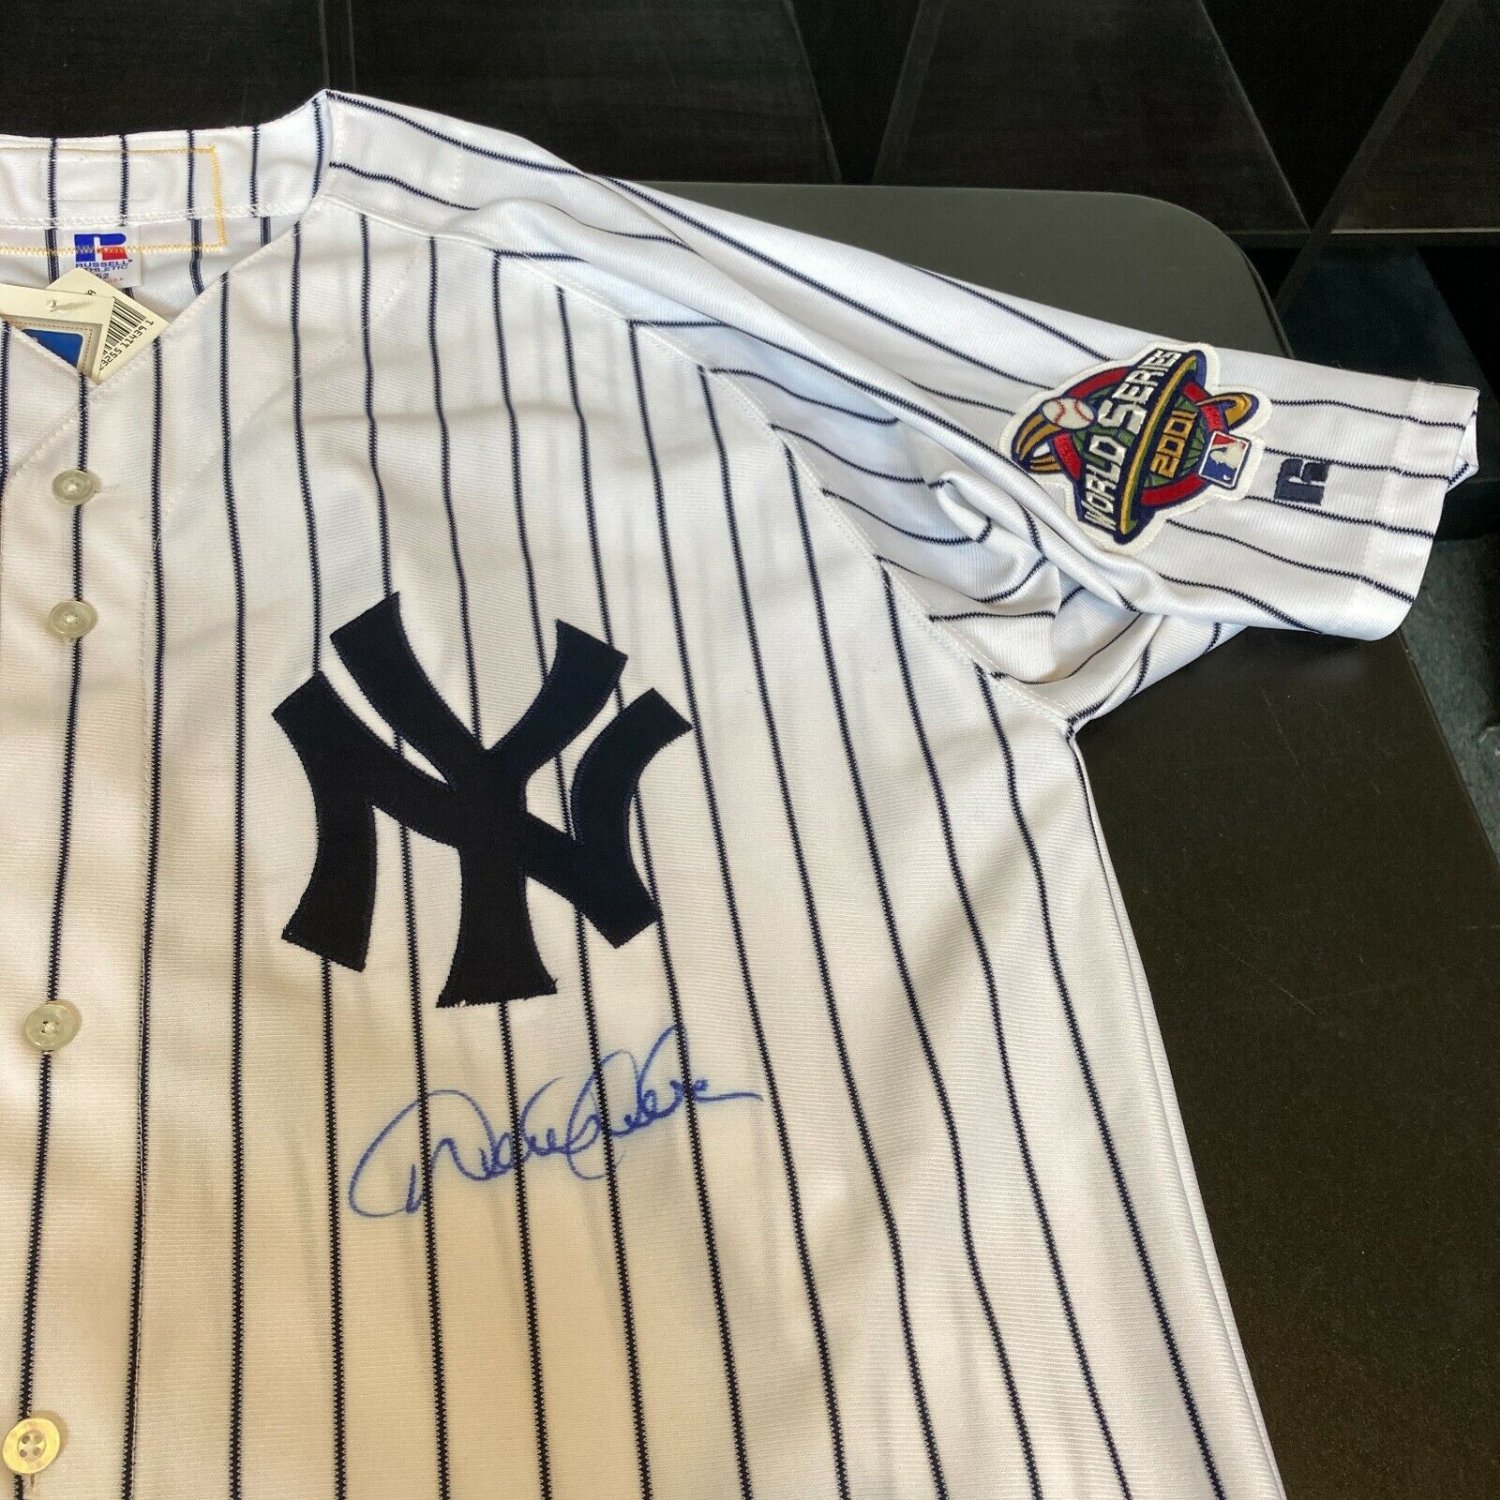 Derek Jeter Autographed Signed 2001 World Series New York